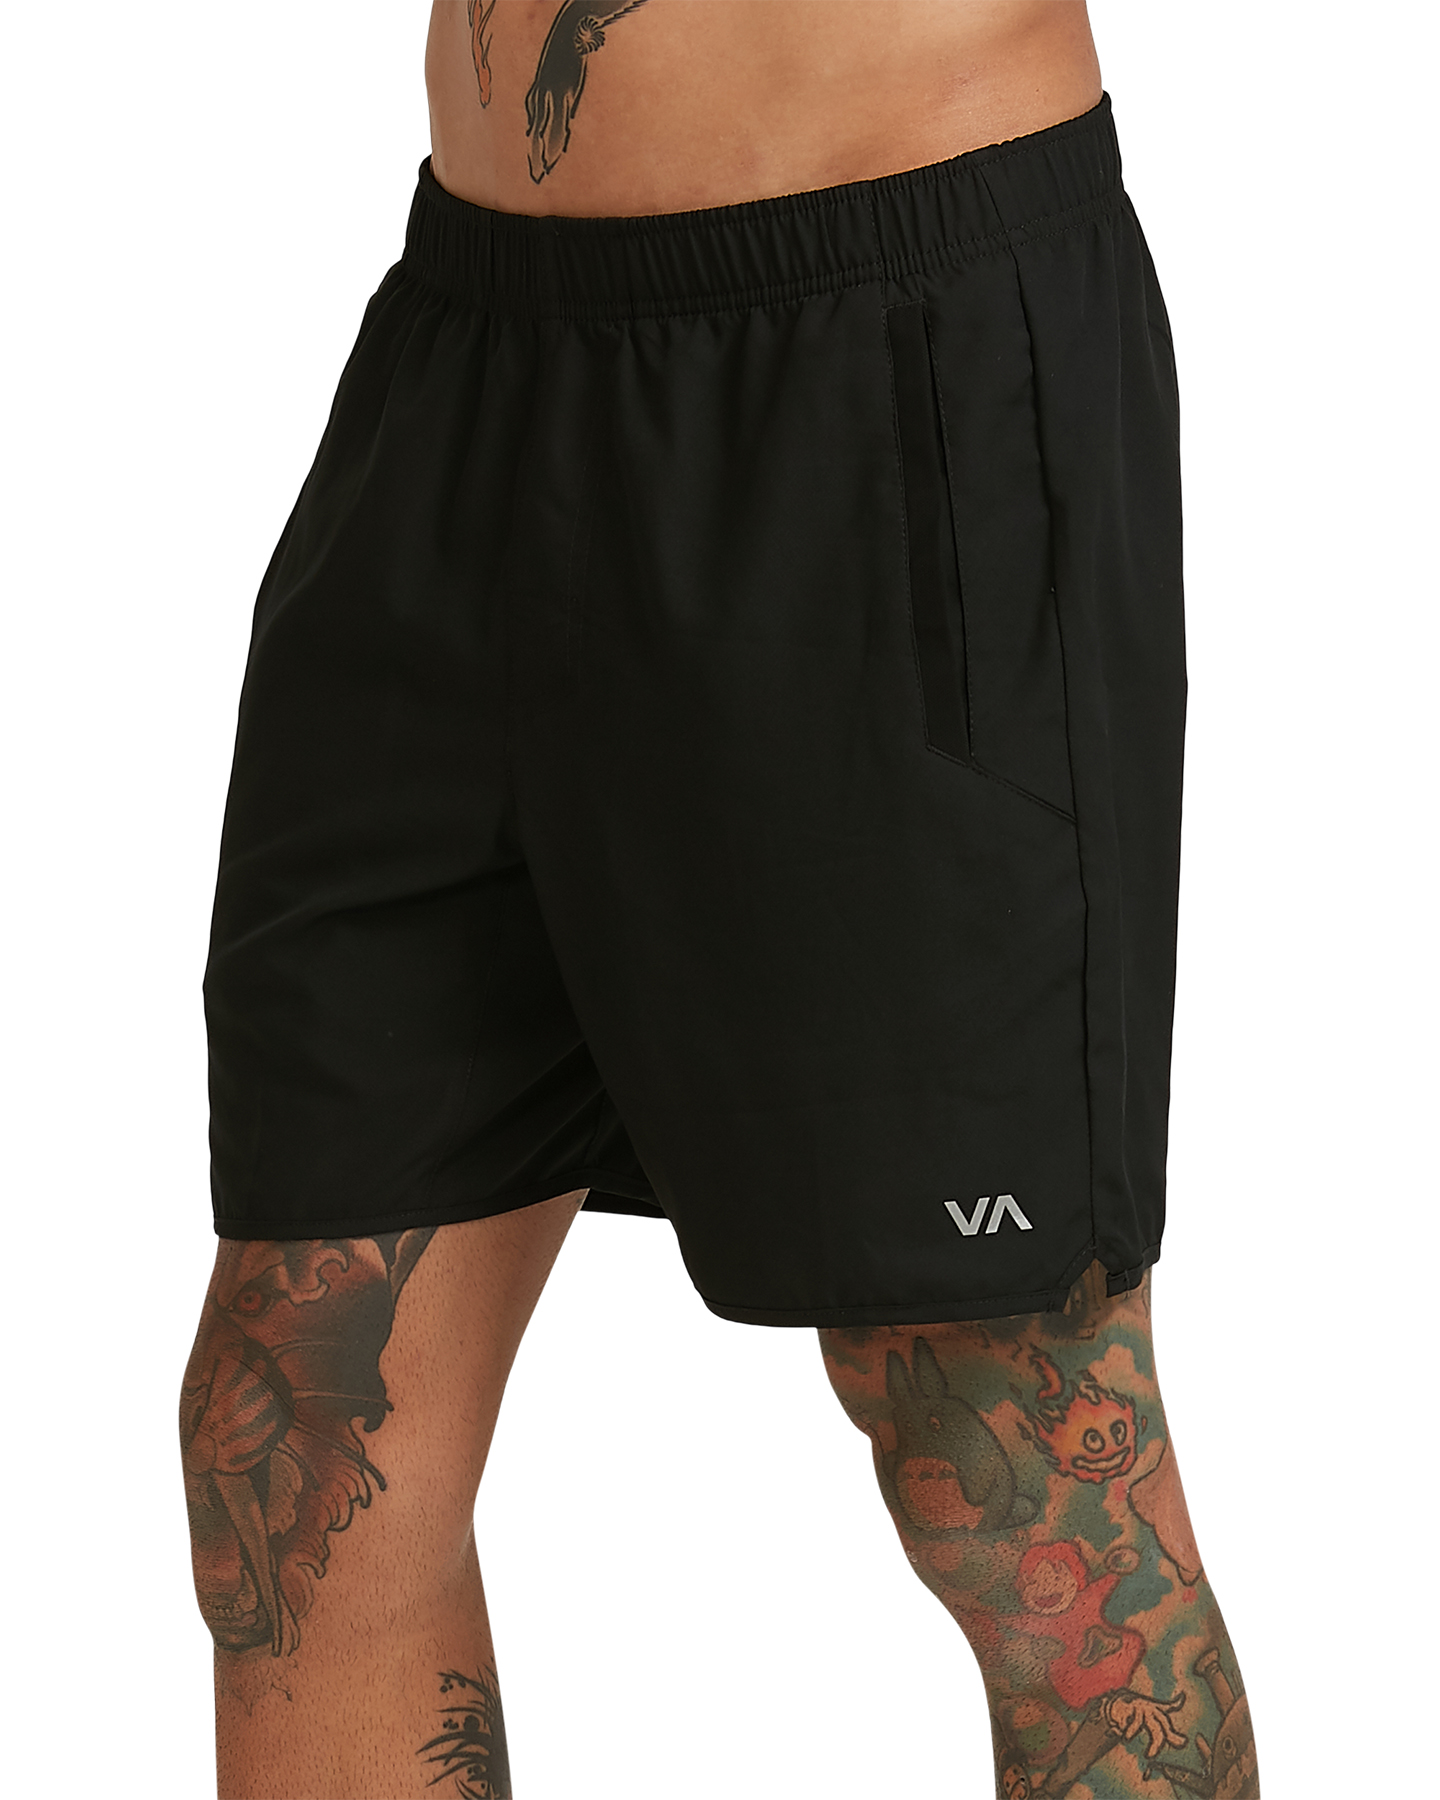 Rvca Yogger Iv Shorts - Black | SurfStitch